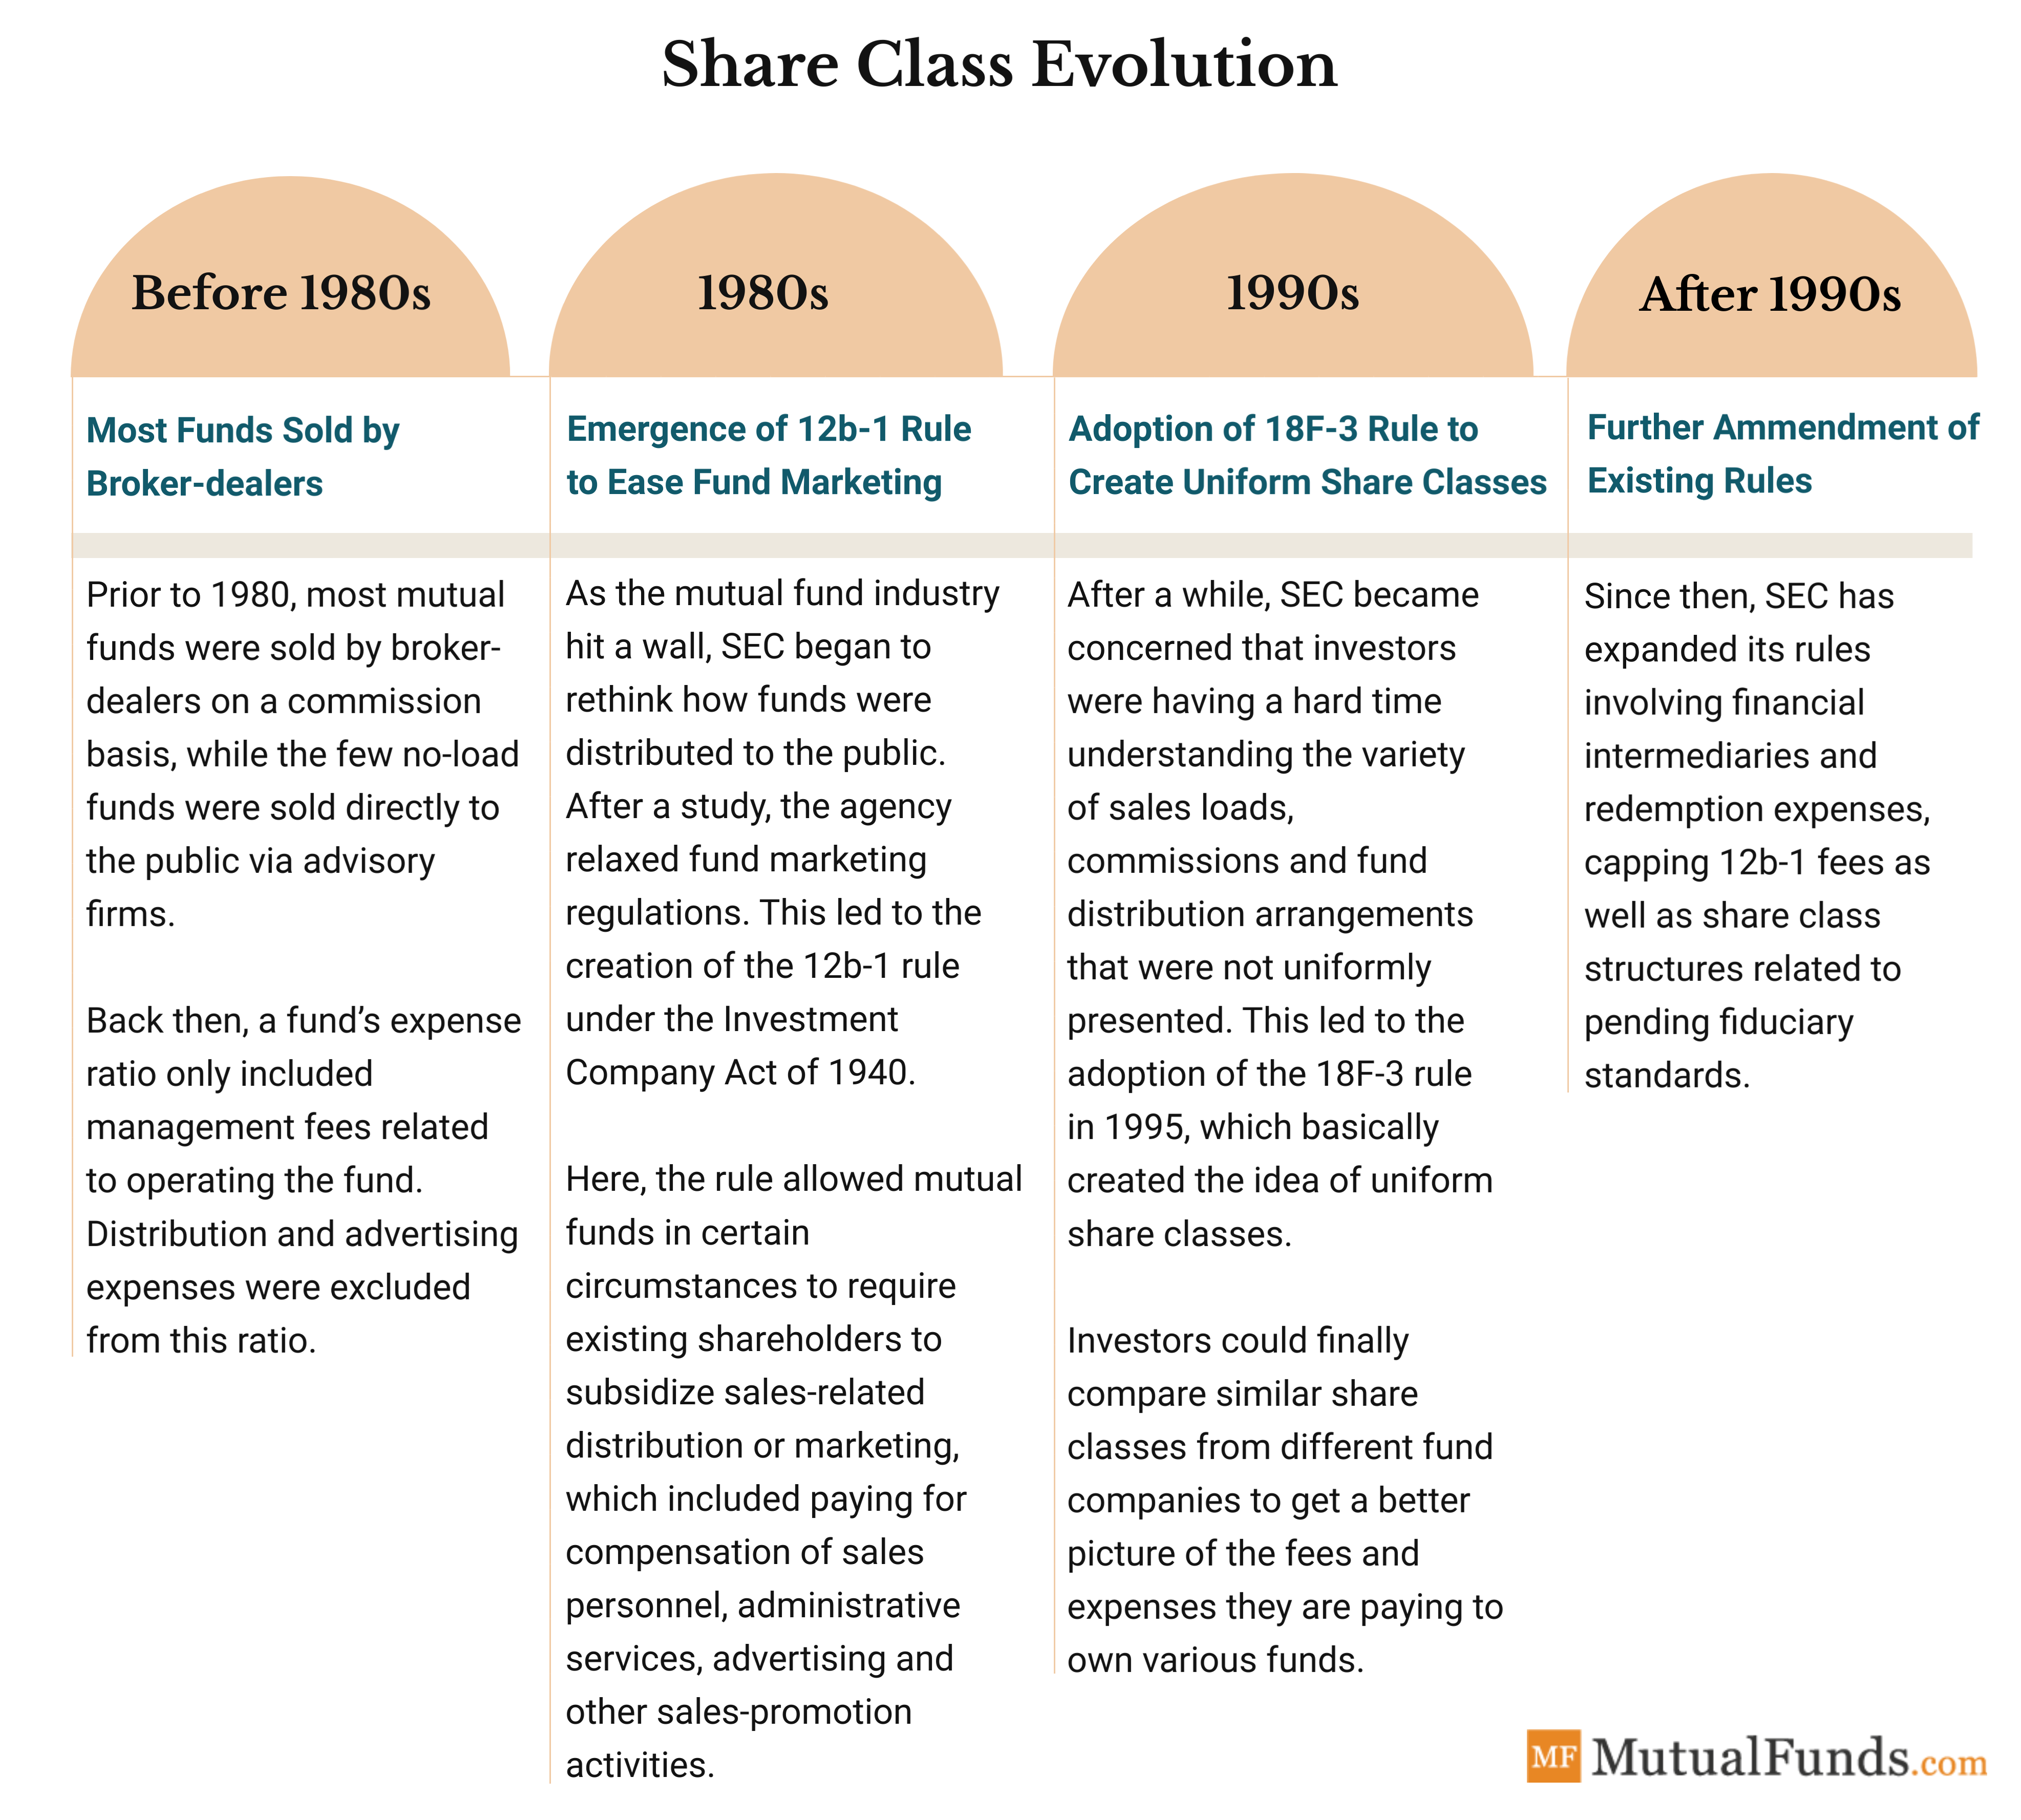 Share class evolution